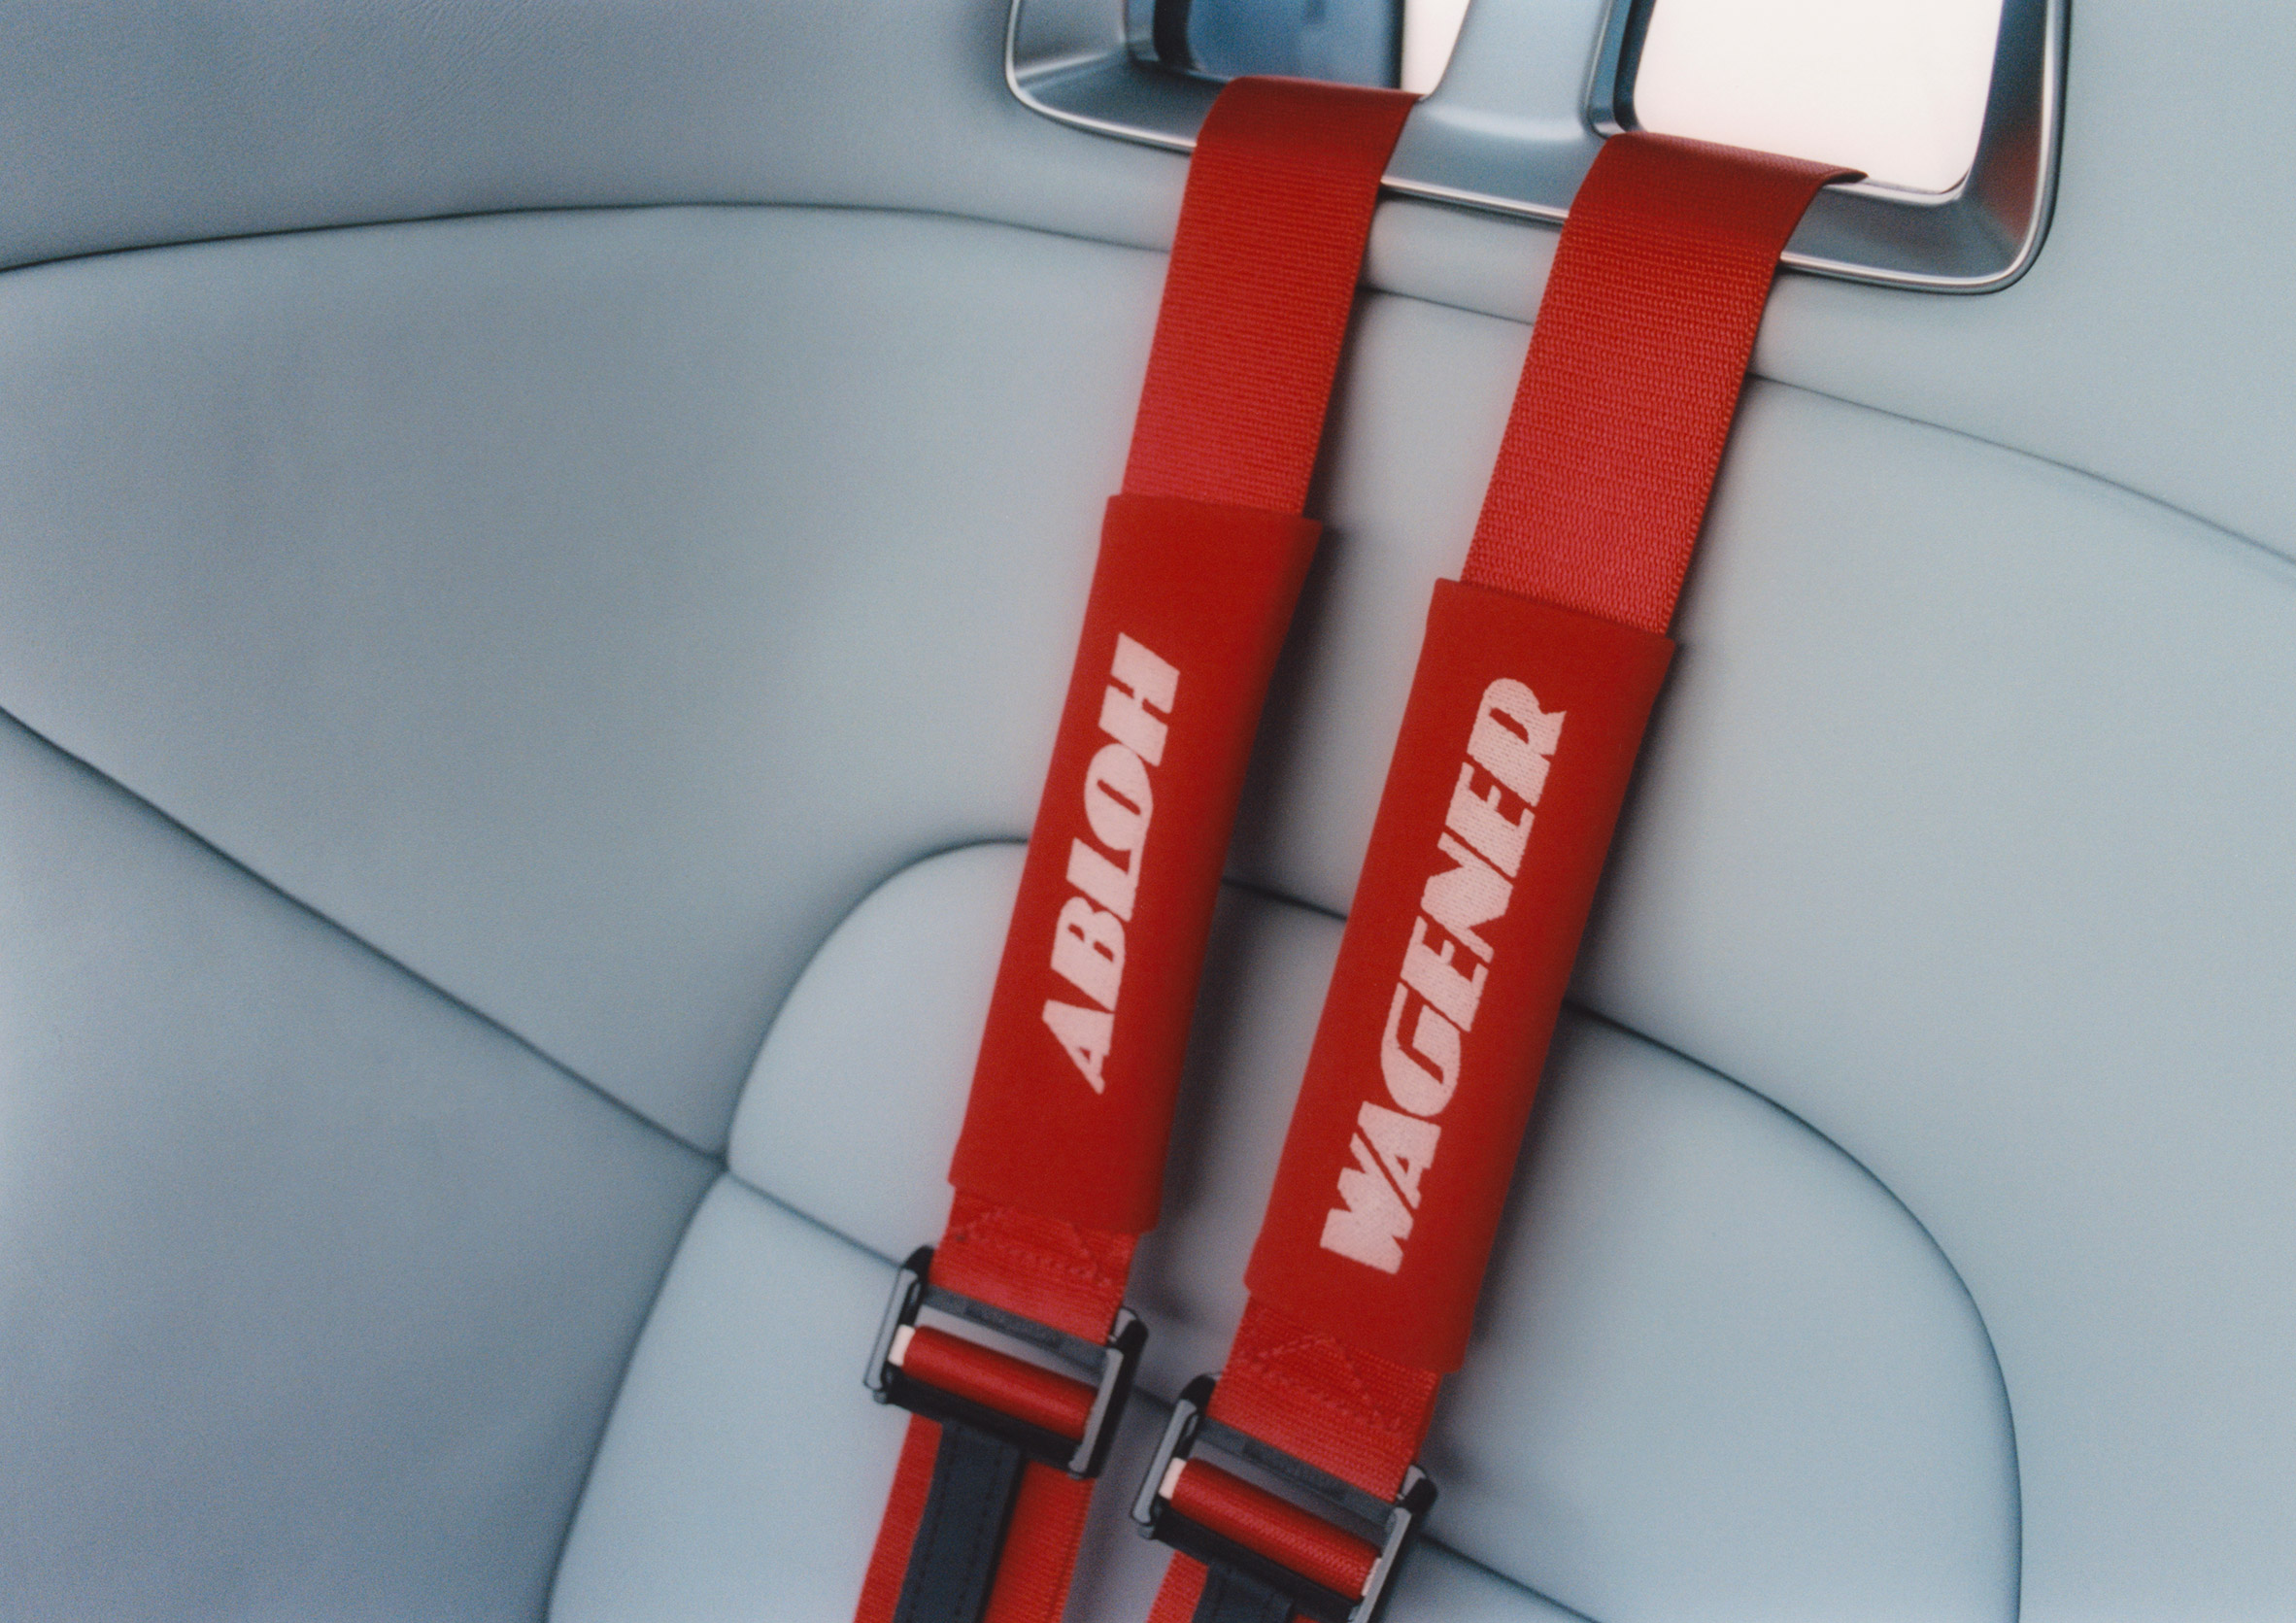 Red seat belts in Project Geländewagen car by Virgil Abloh and Mercedes Benz